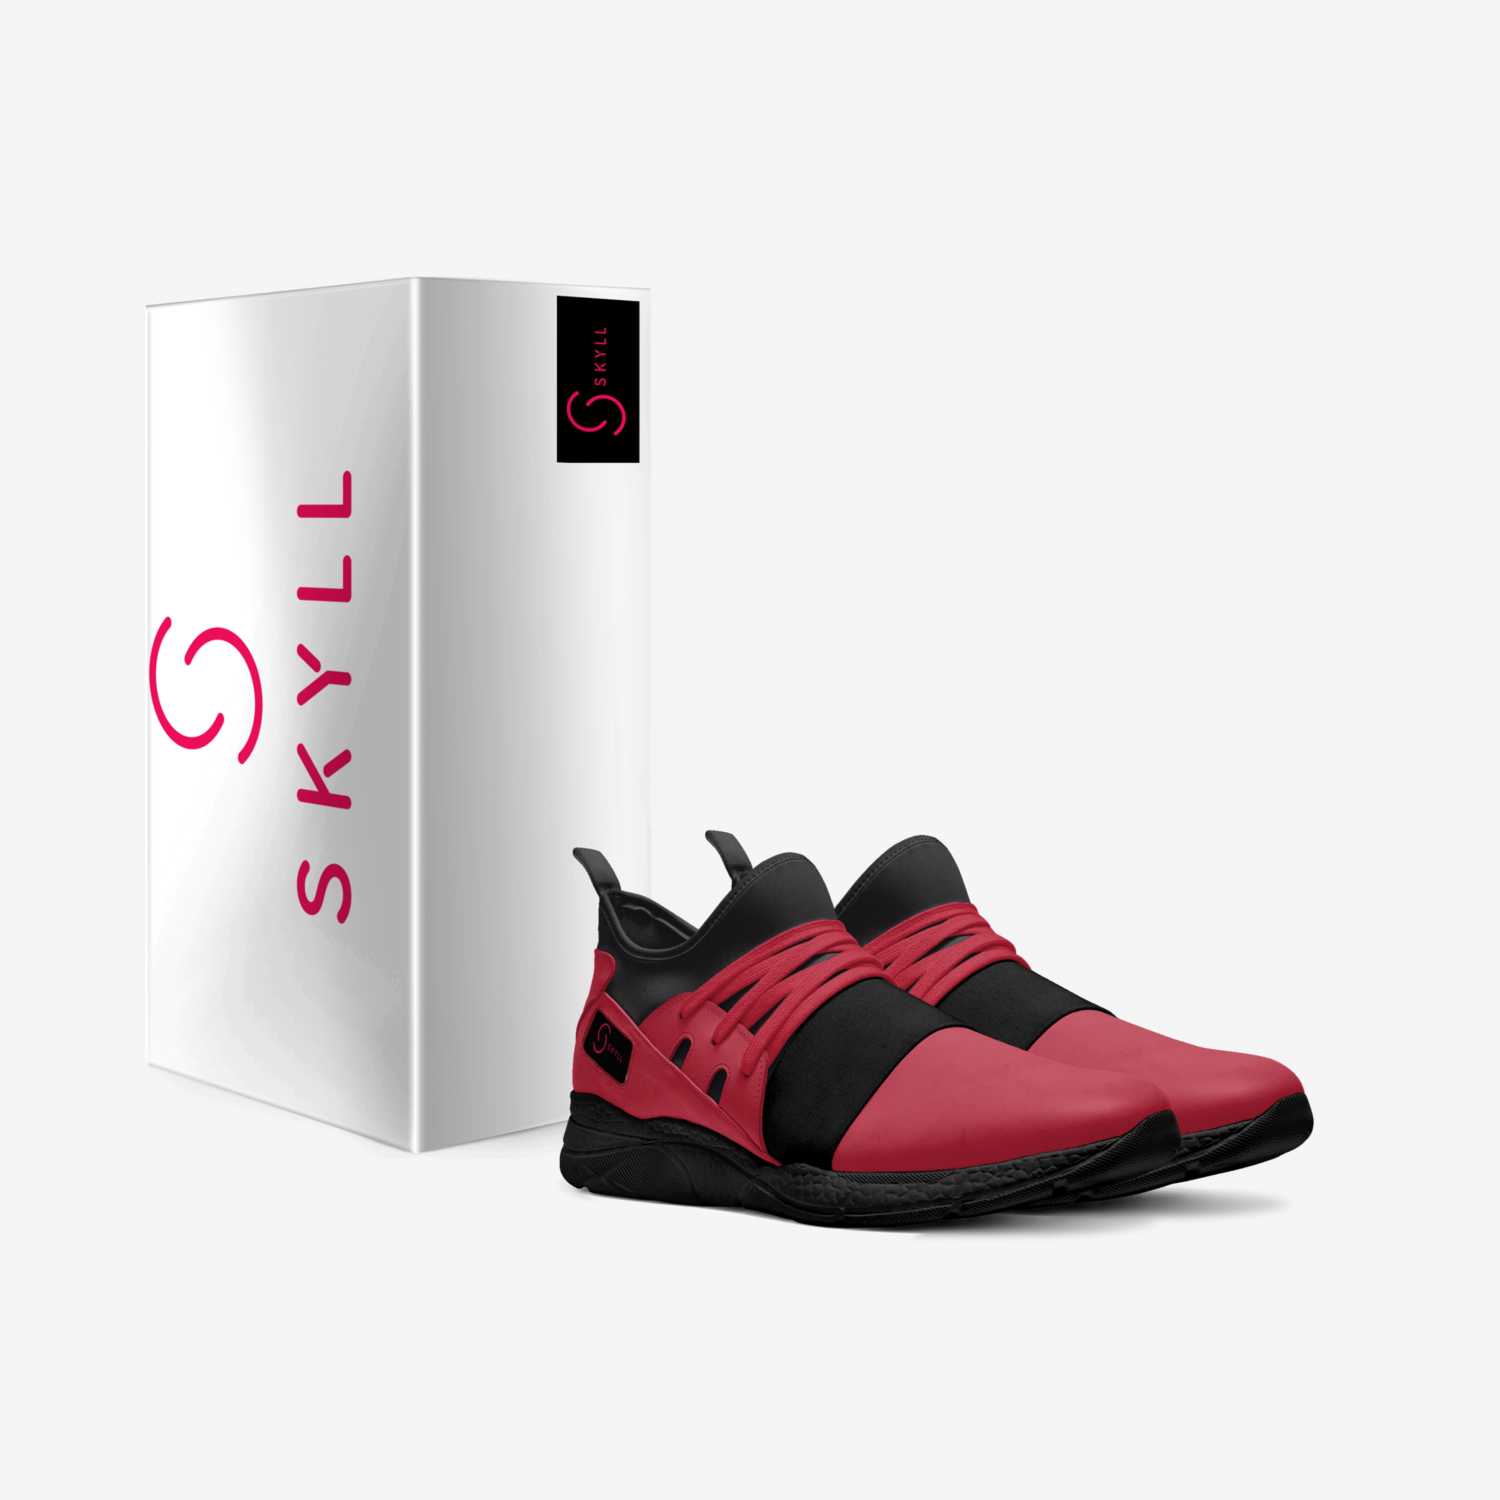 VIVELESPORT1 custom made in Italy shoes by Skyll Lamine | Box view